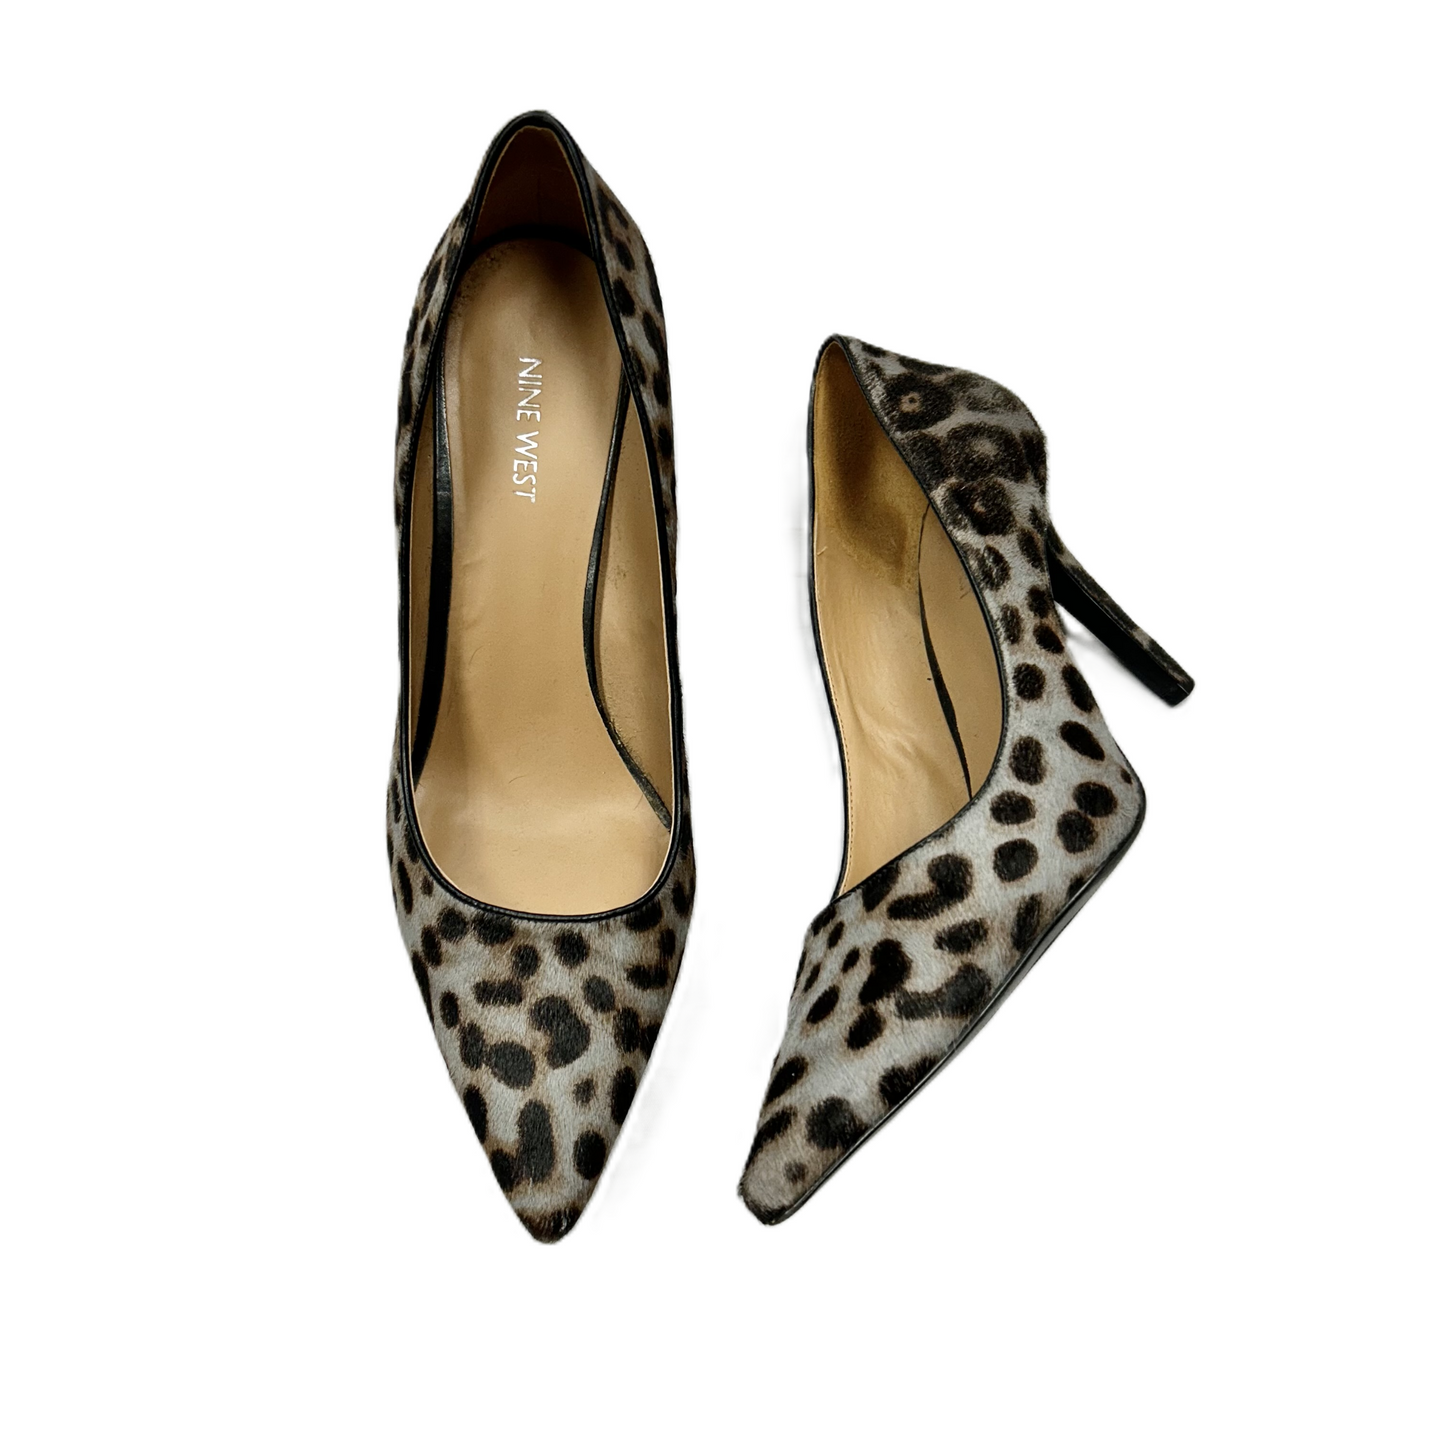 Leopard Print Shoes Heels Stiletto By Nine West, Size: 11